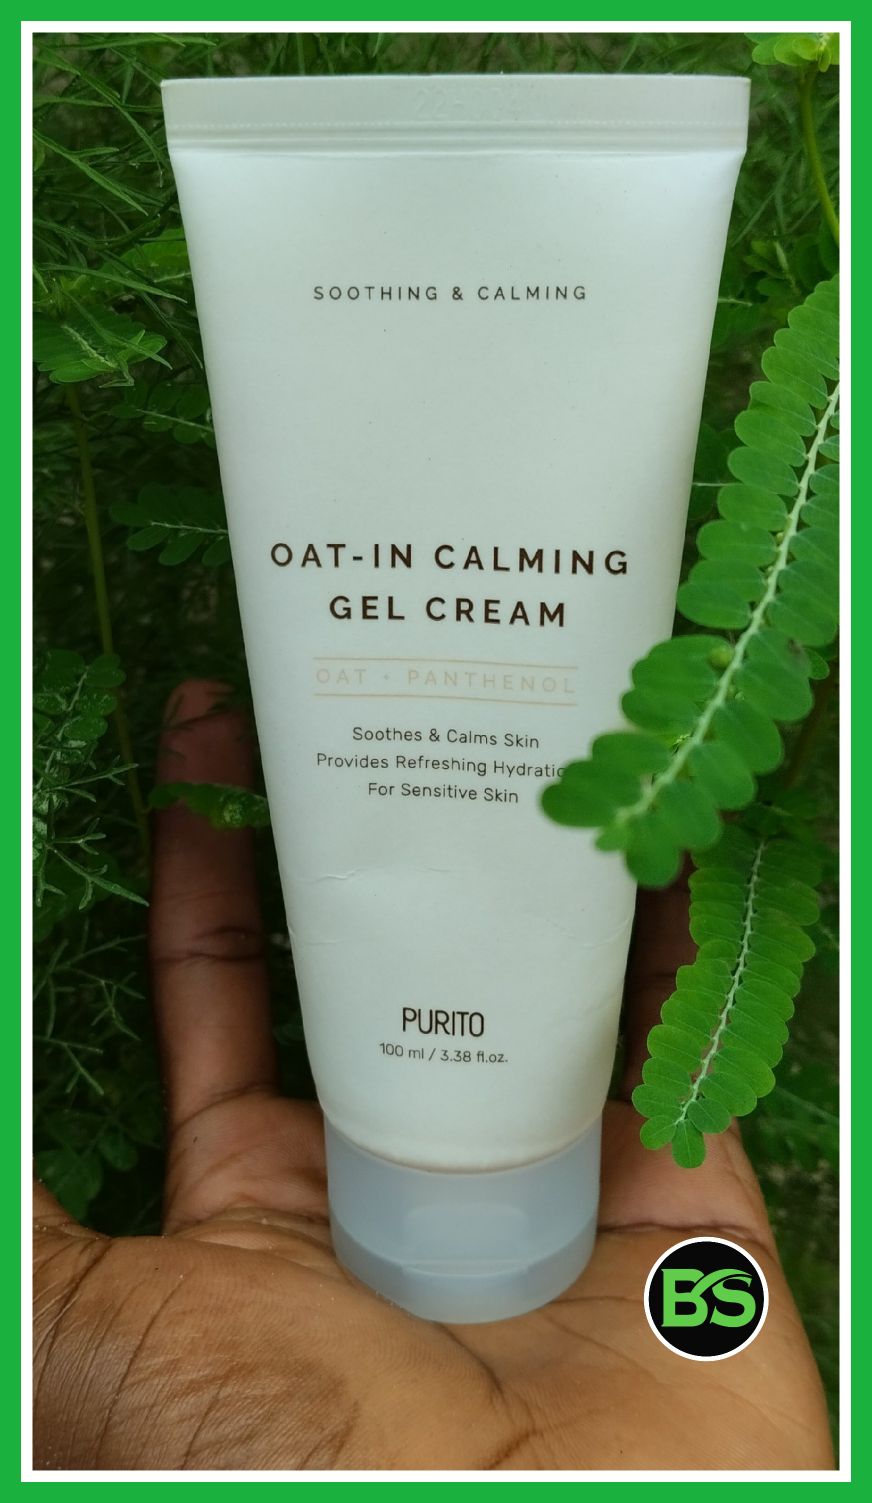 PURITO Oat-In Calming Gel Cream review 